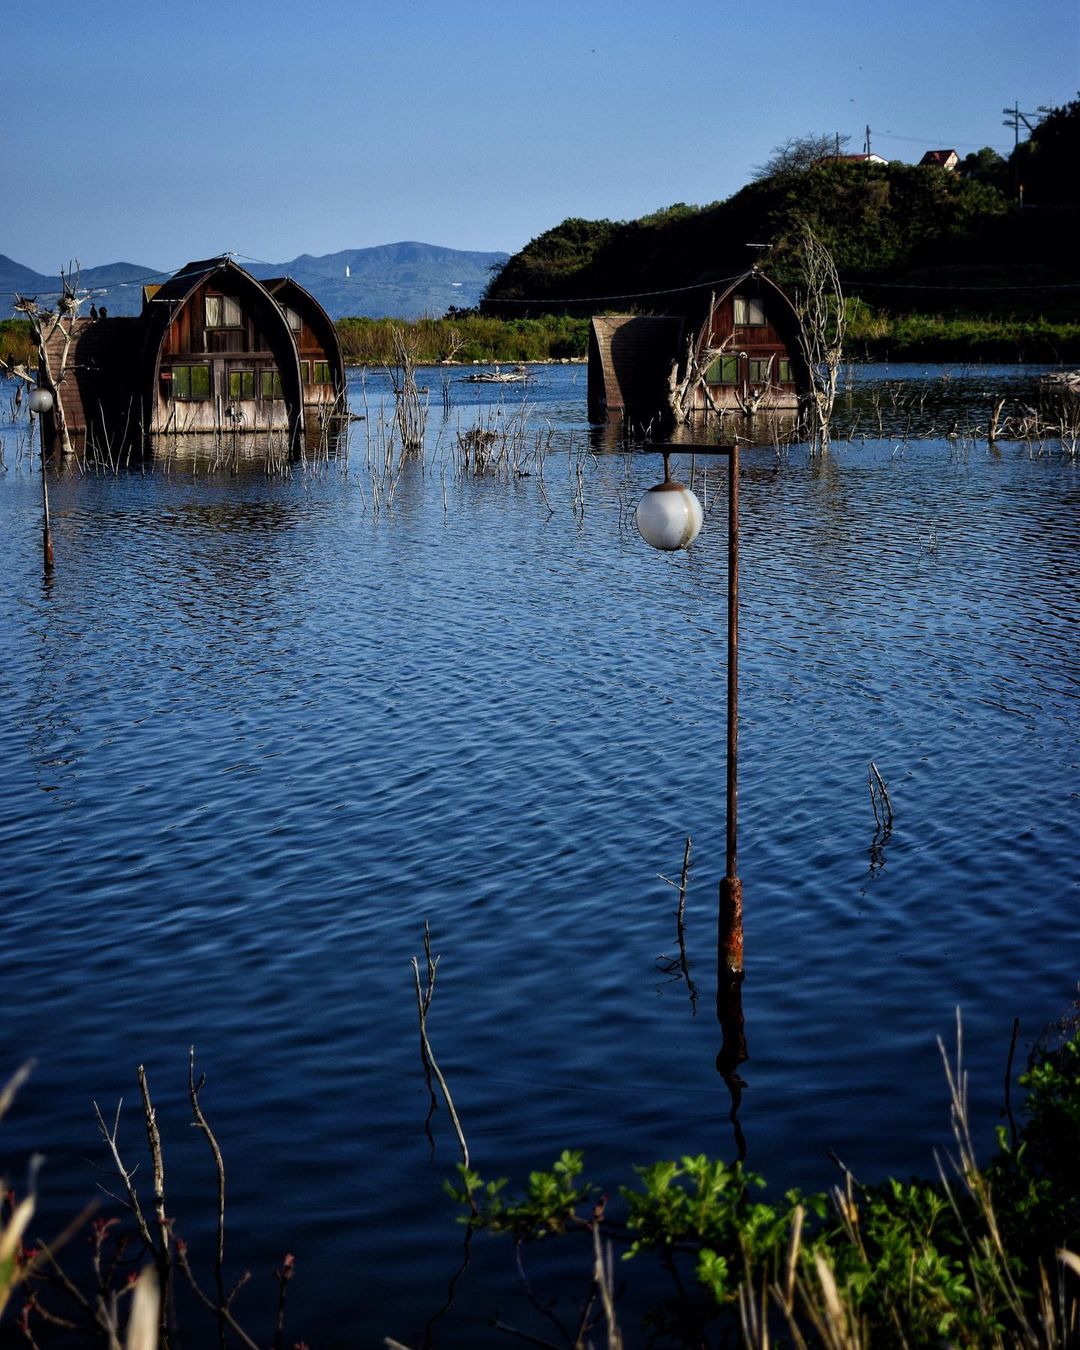 Ushimado Green Farm Ruins - rusty houses in a pool of water